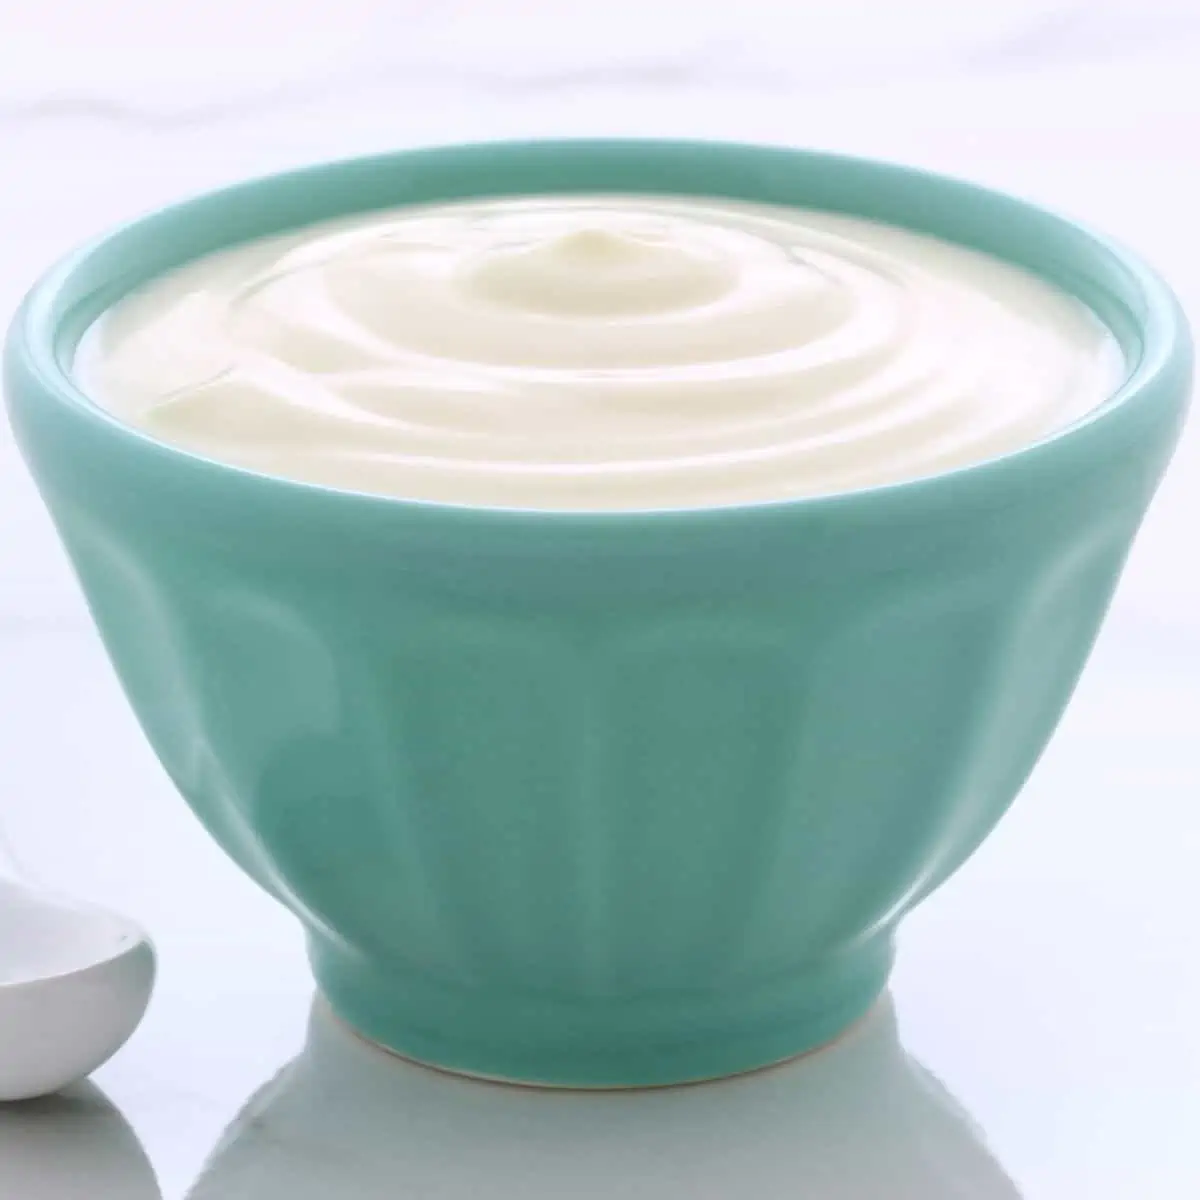 Creamy plain yogurt in turquoise bowl.
